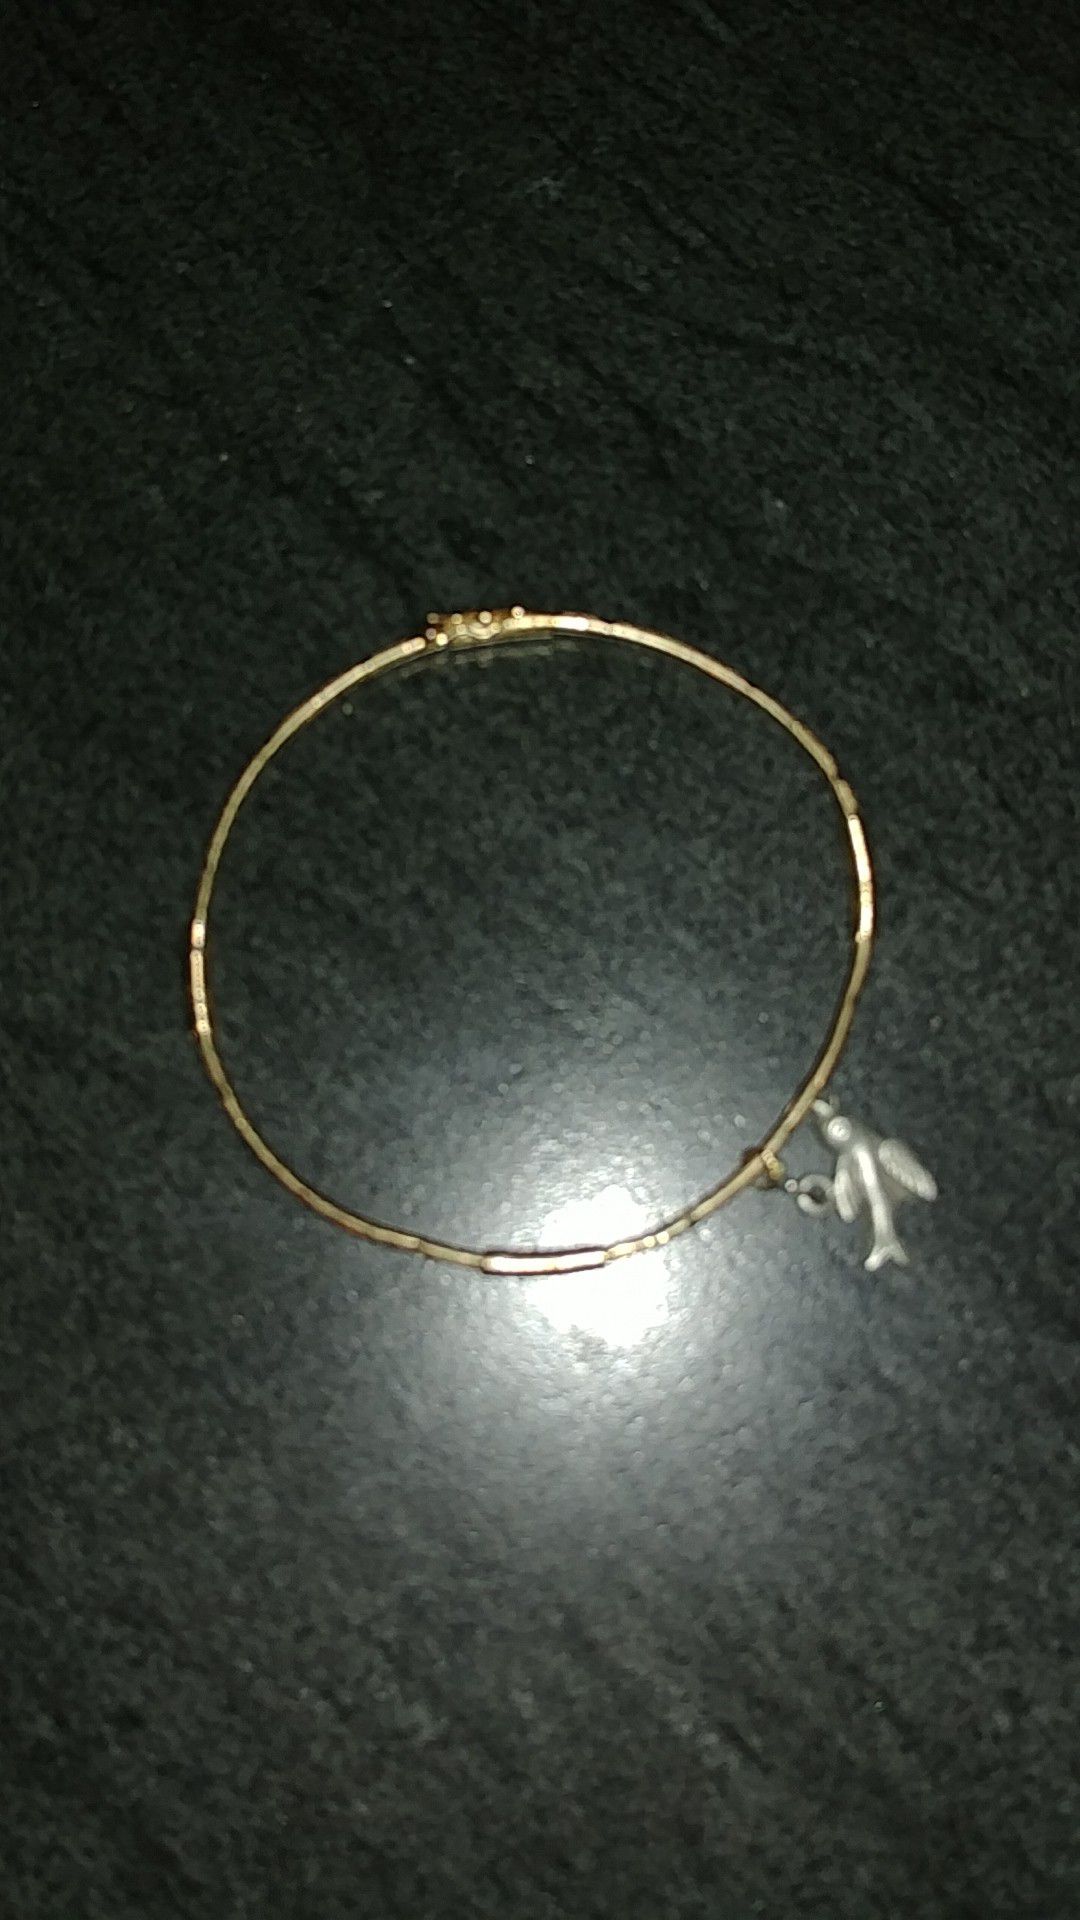 Gold bangle bracelet